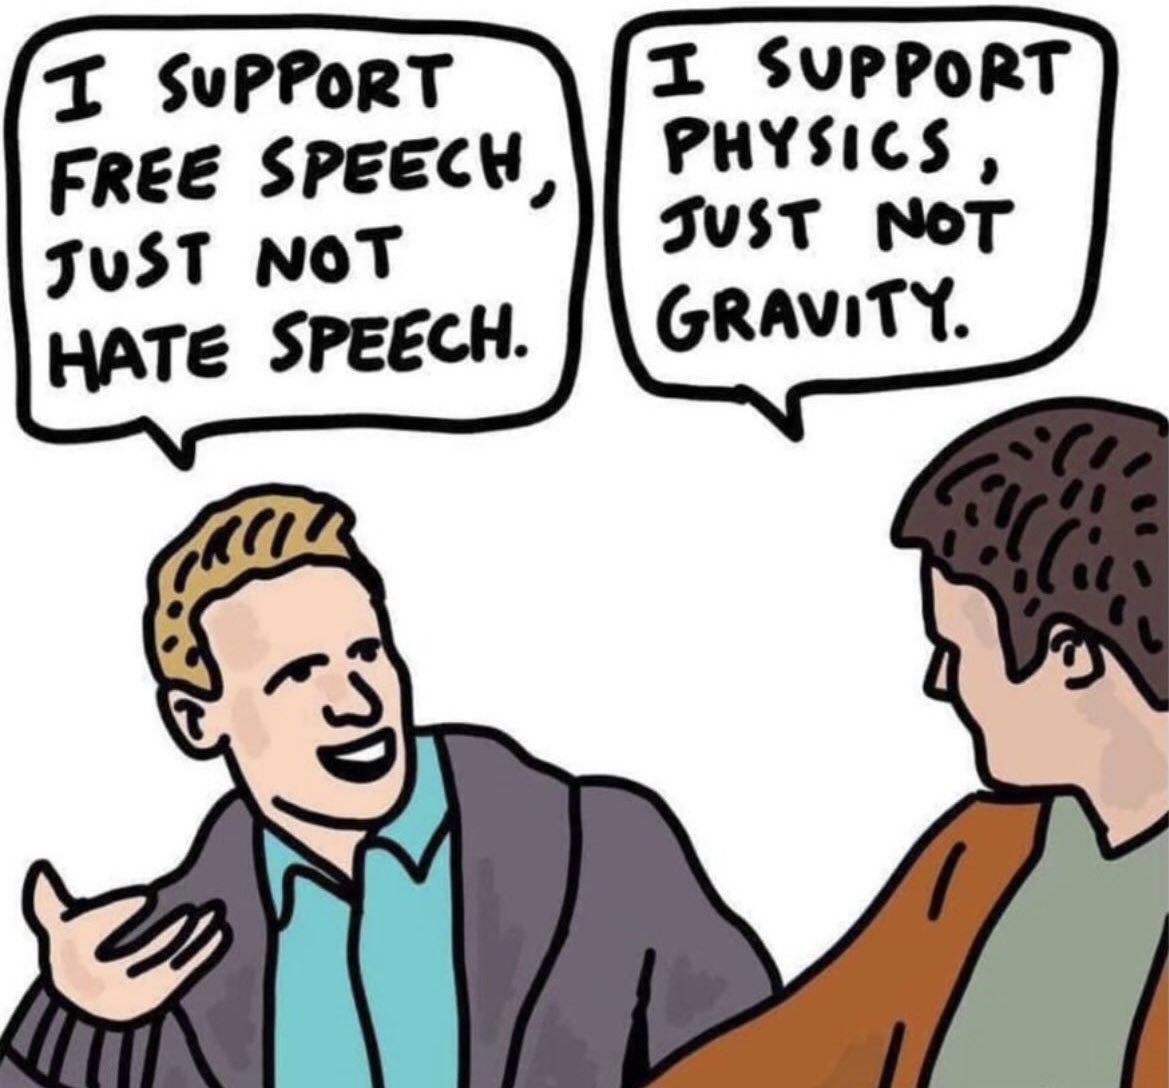 Do you support Free Speech?